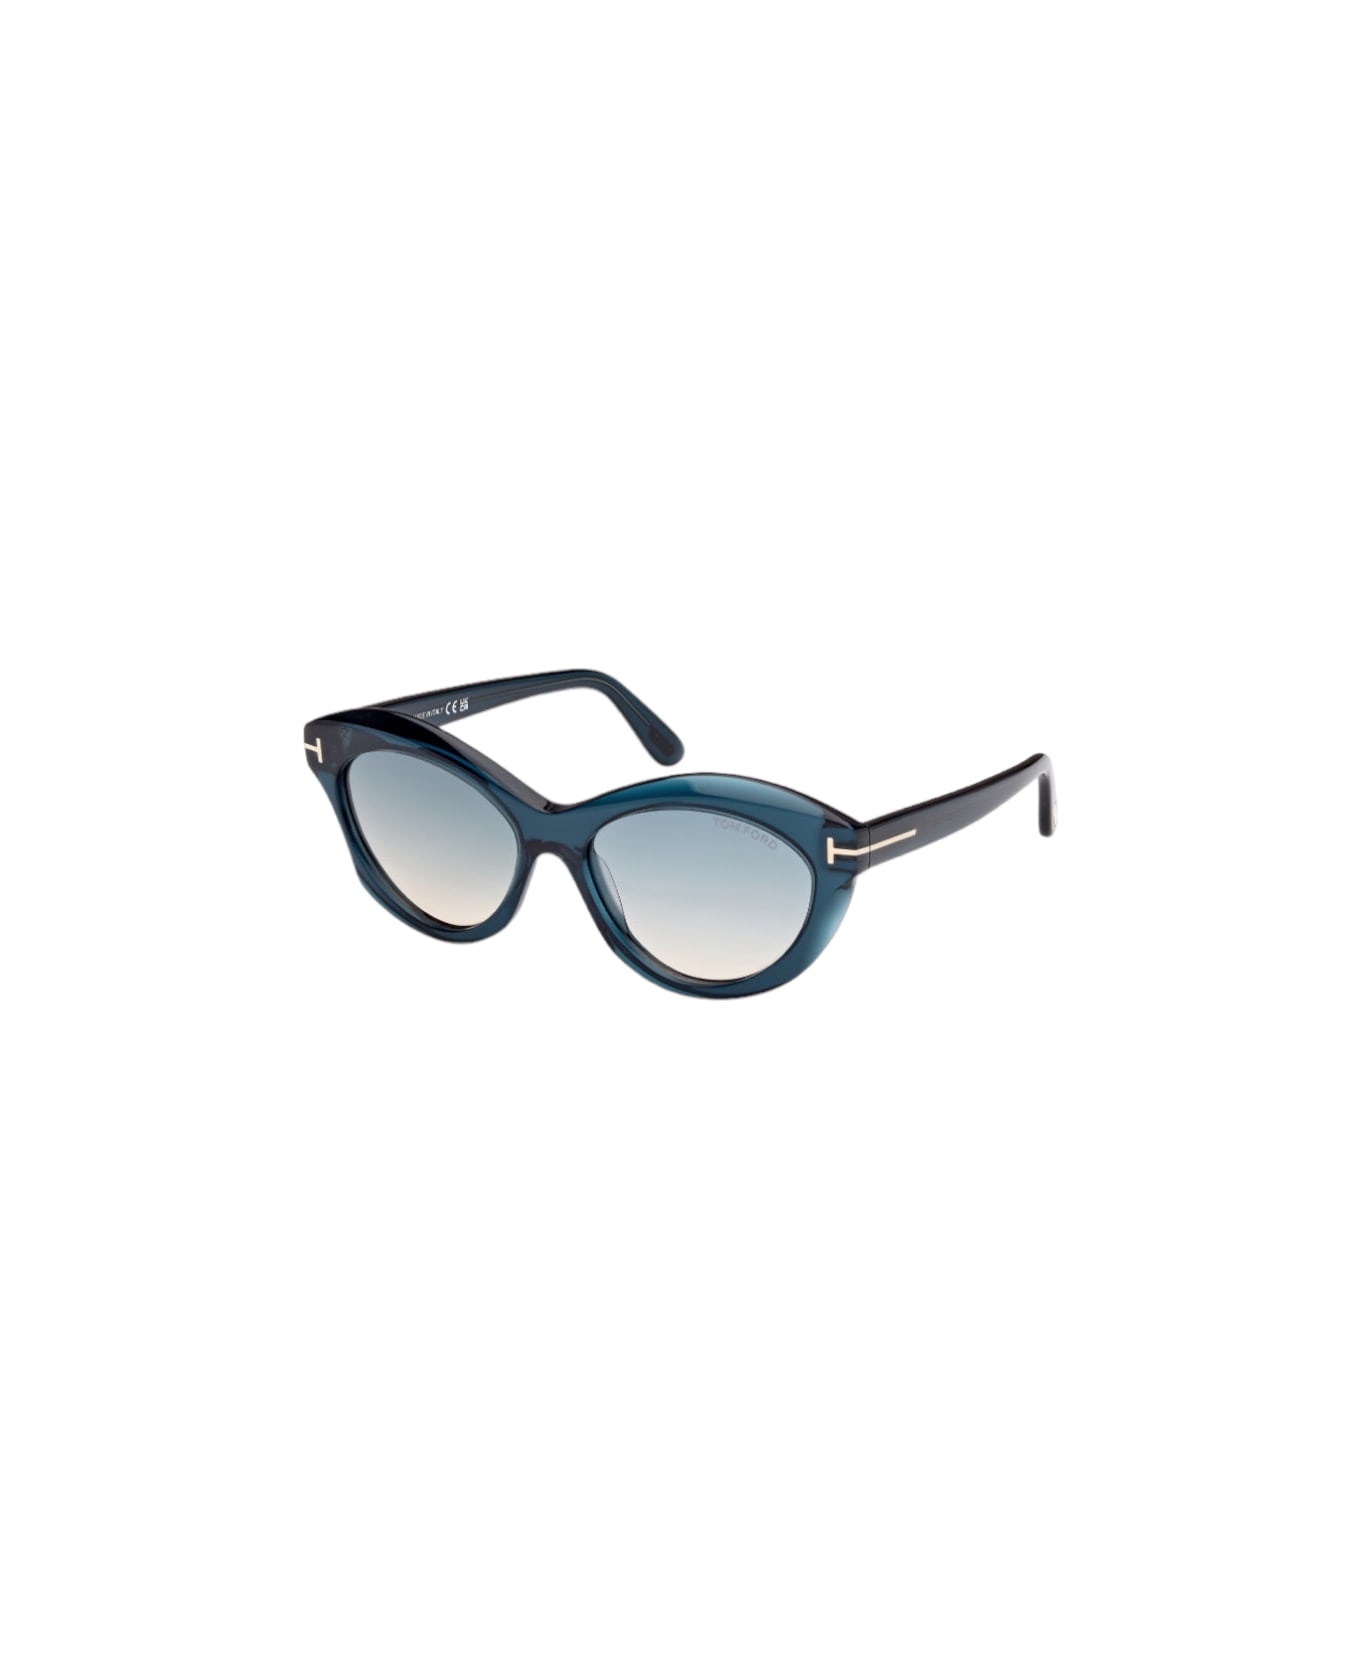 Tom Ford Eyewear Toni - Tf 1111 /s Sunglasses サングラス